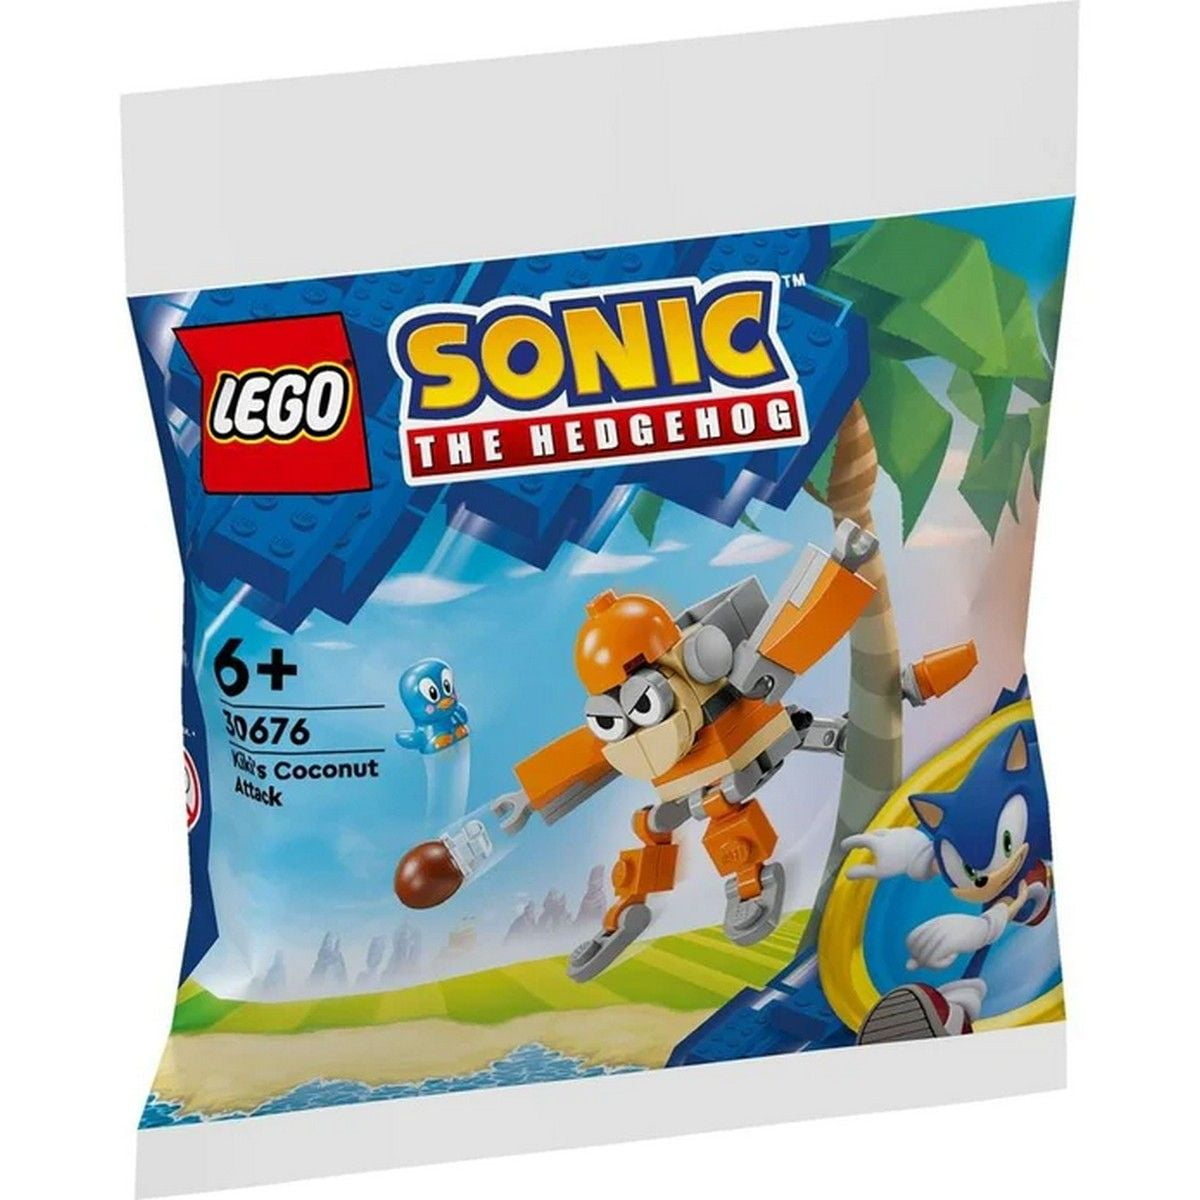 Kiki's Coconut Attack LEGO Sonic the Hedgehog 30676